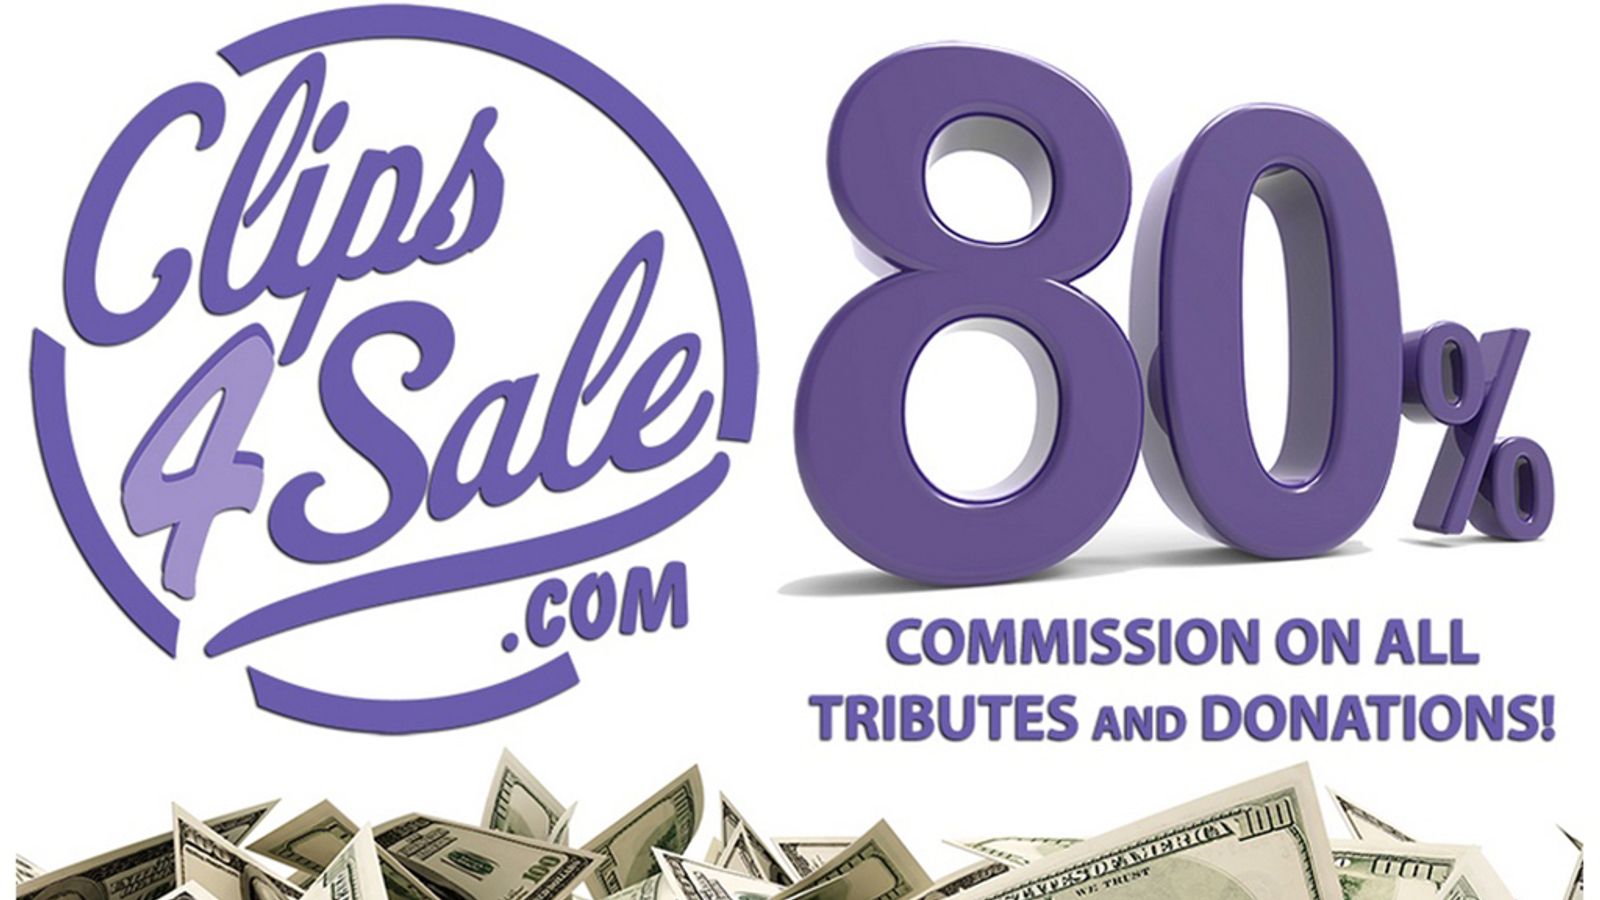 Clips4Sale Raises Commission for Tributes & Donations